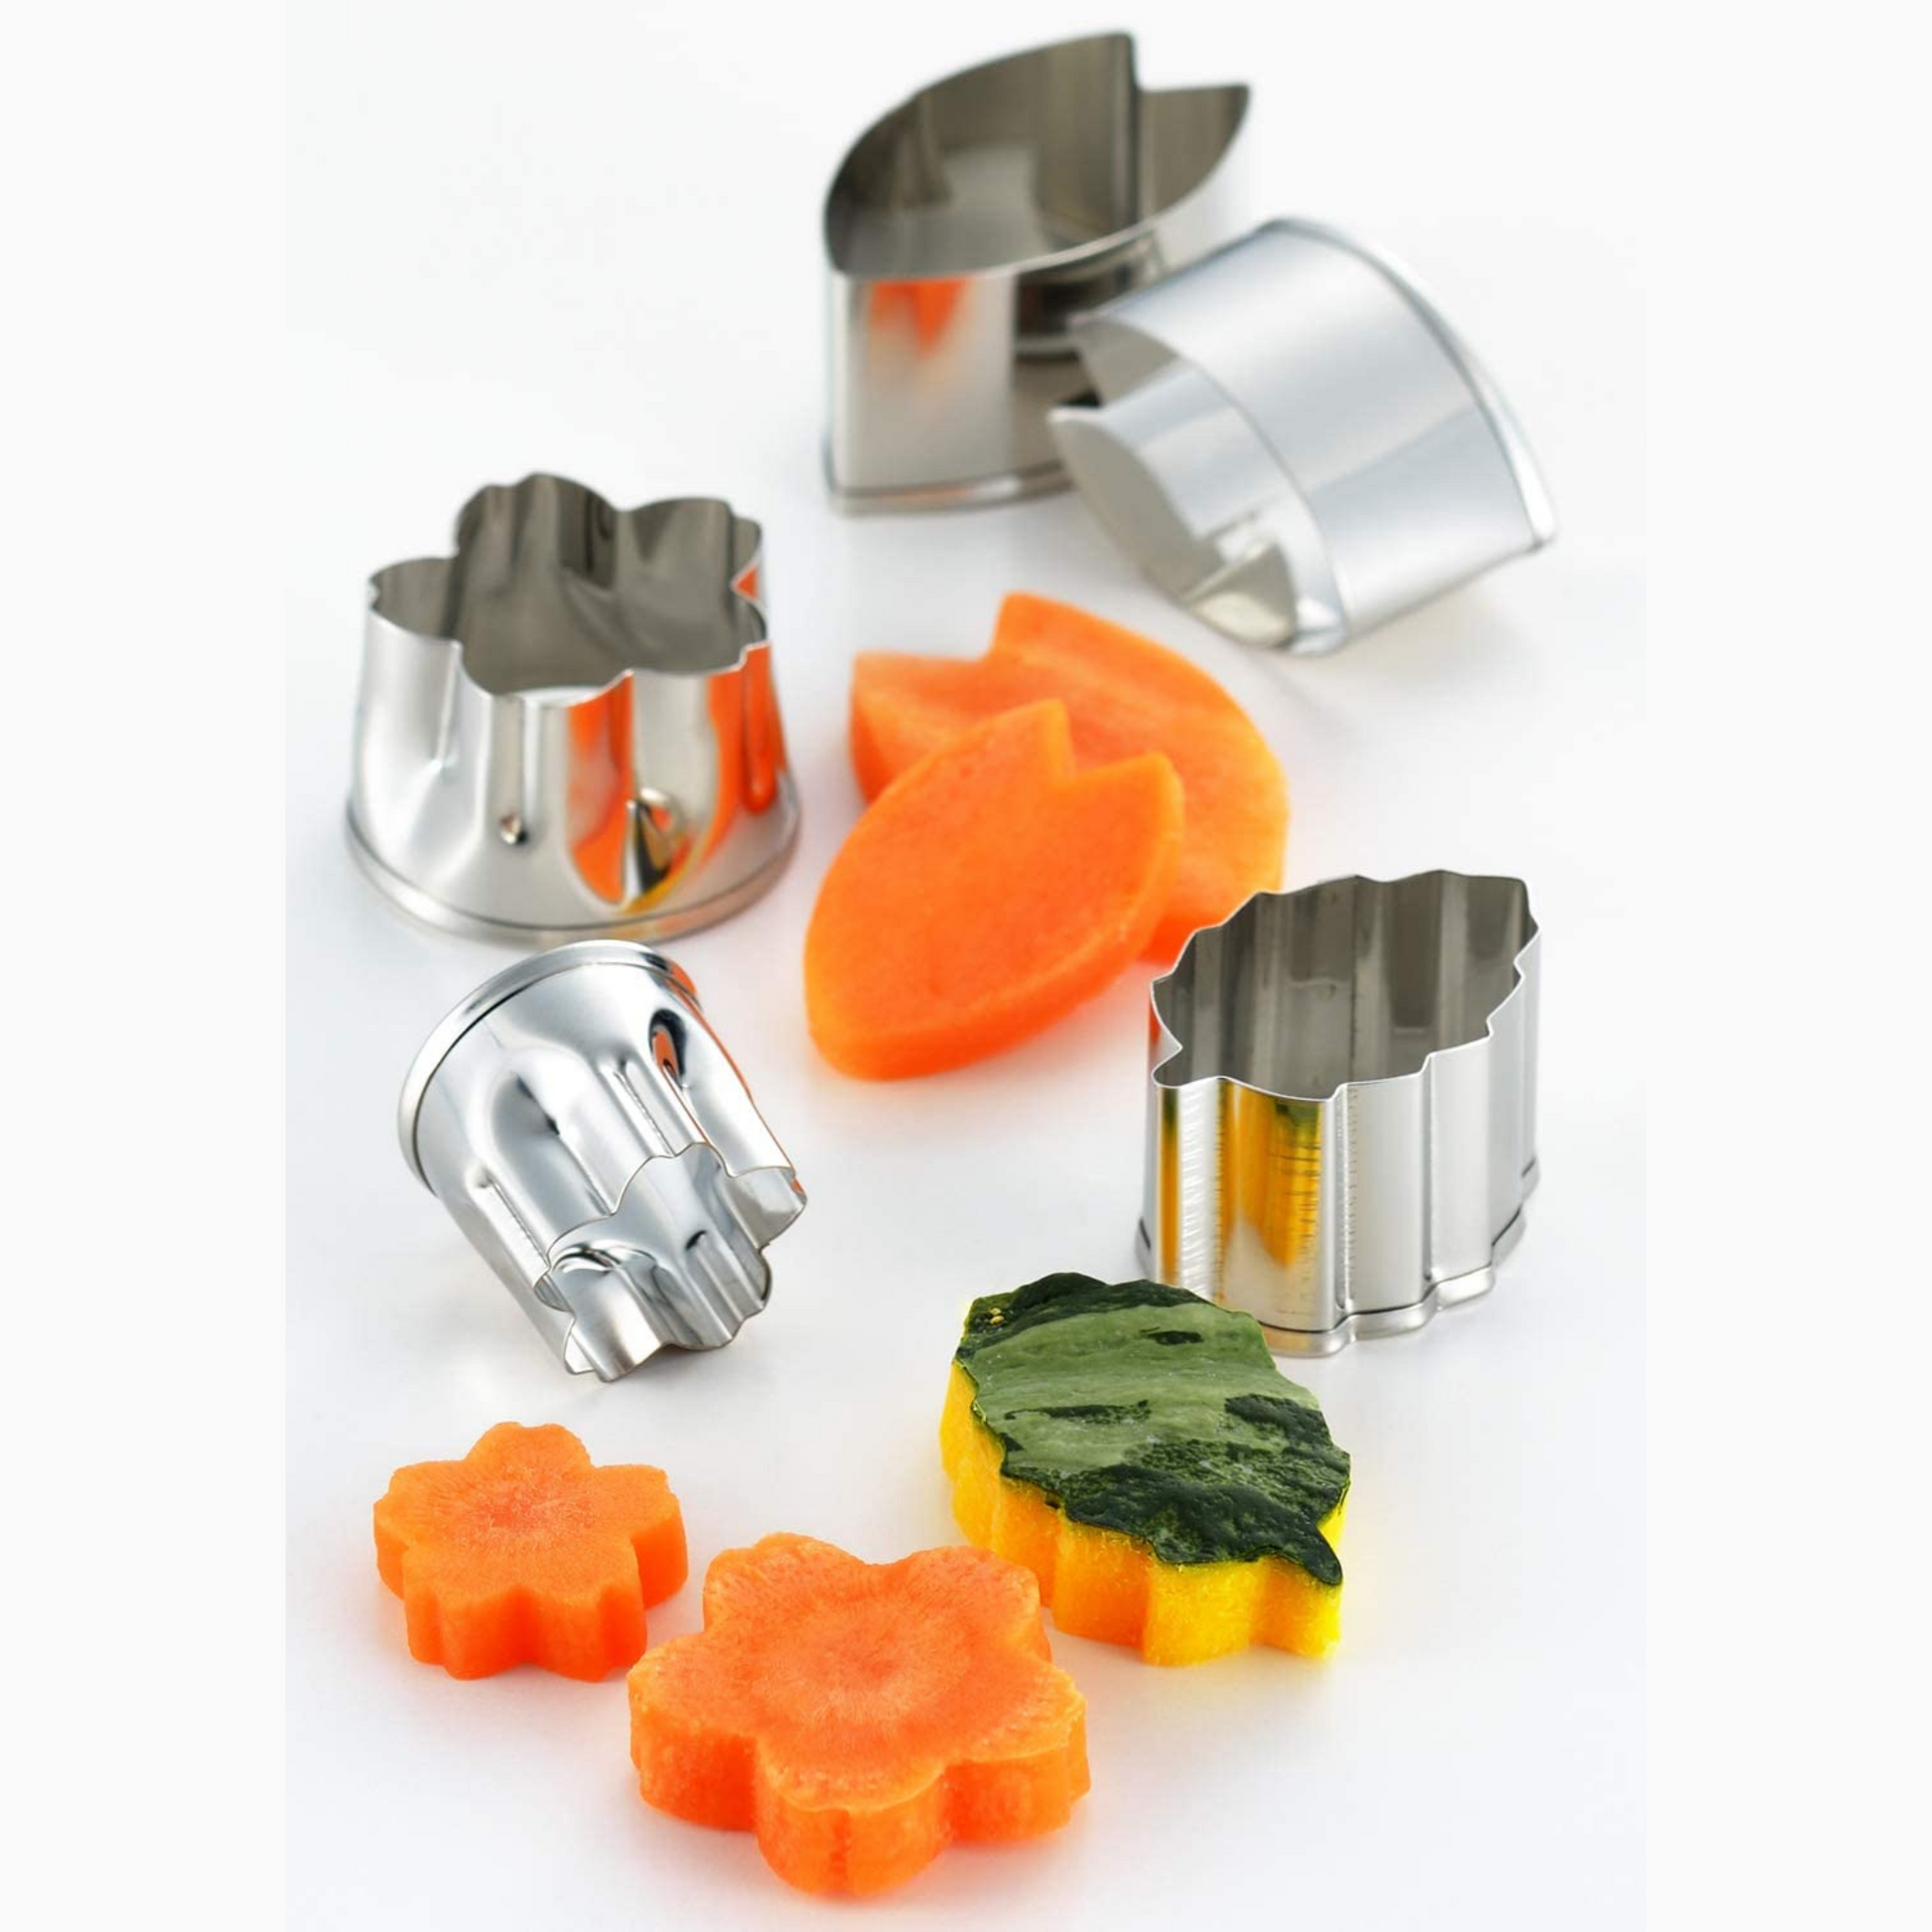 Vegetable Cutter Korean Carrot  Kitchen Accessories Vegetable